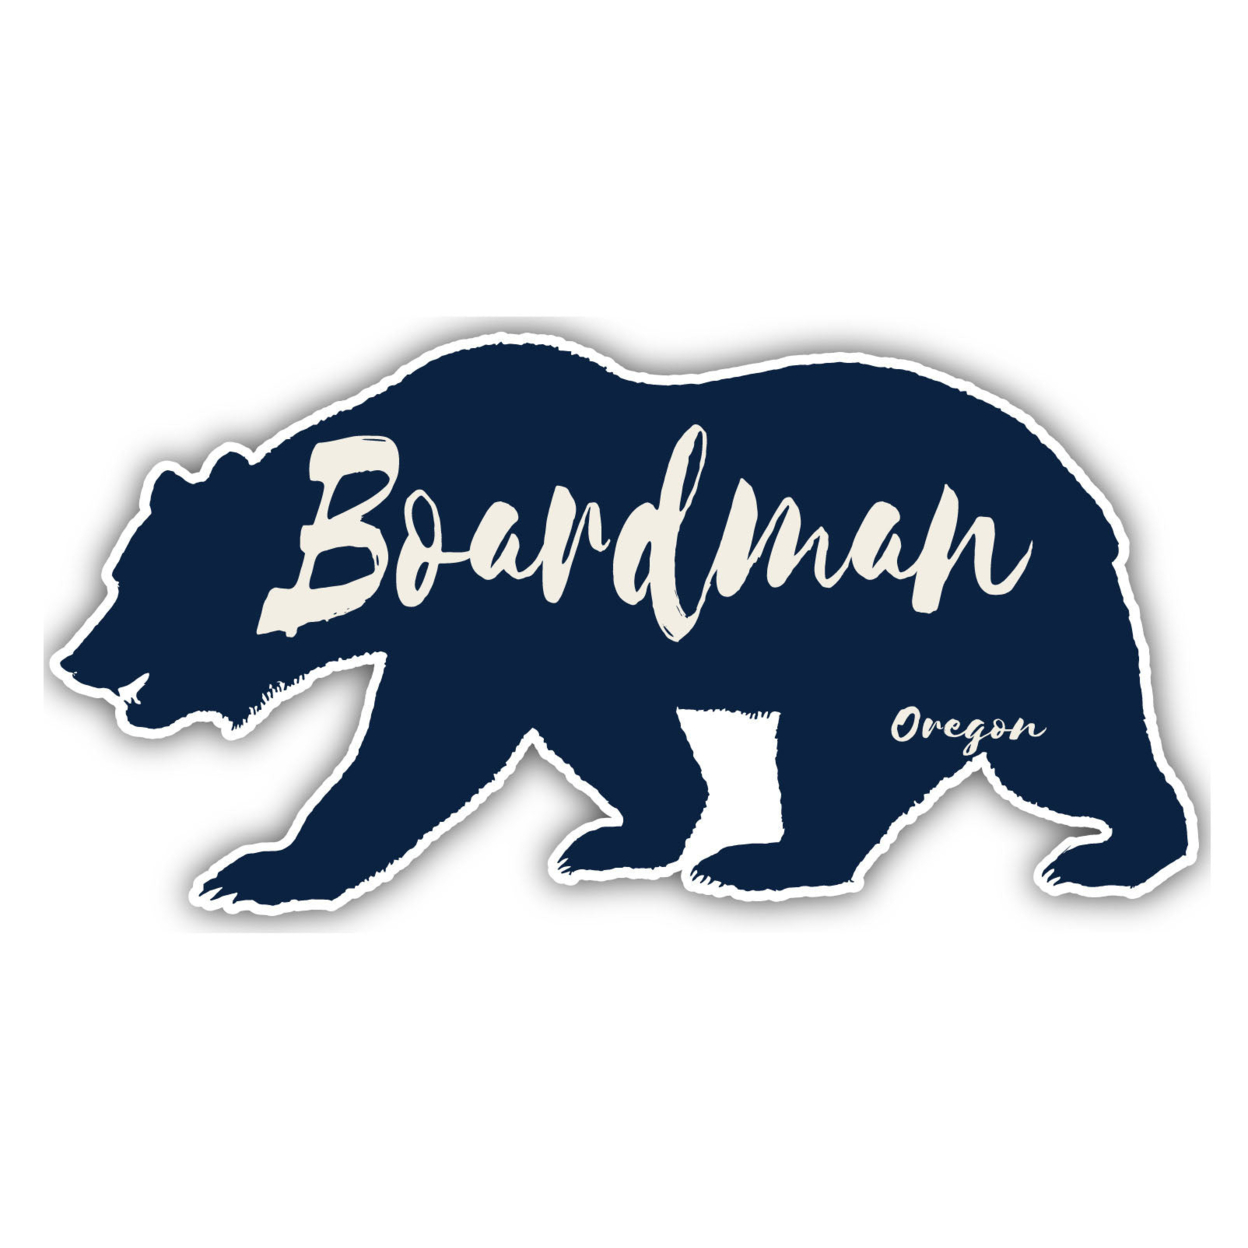 Boardman Oregon Souvenir Decorative Stickers (Choose Theme And Size) - 4-Pack, 6-Inch, Tent